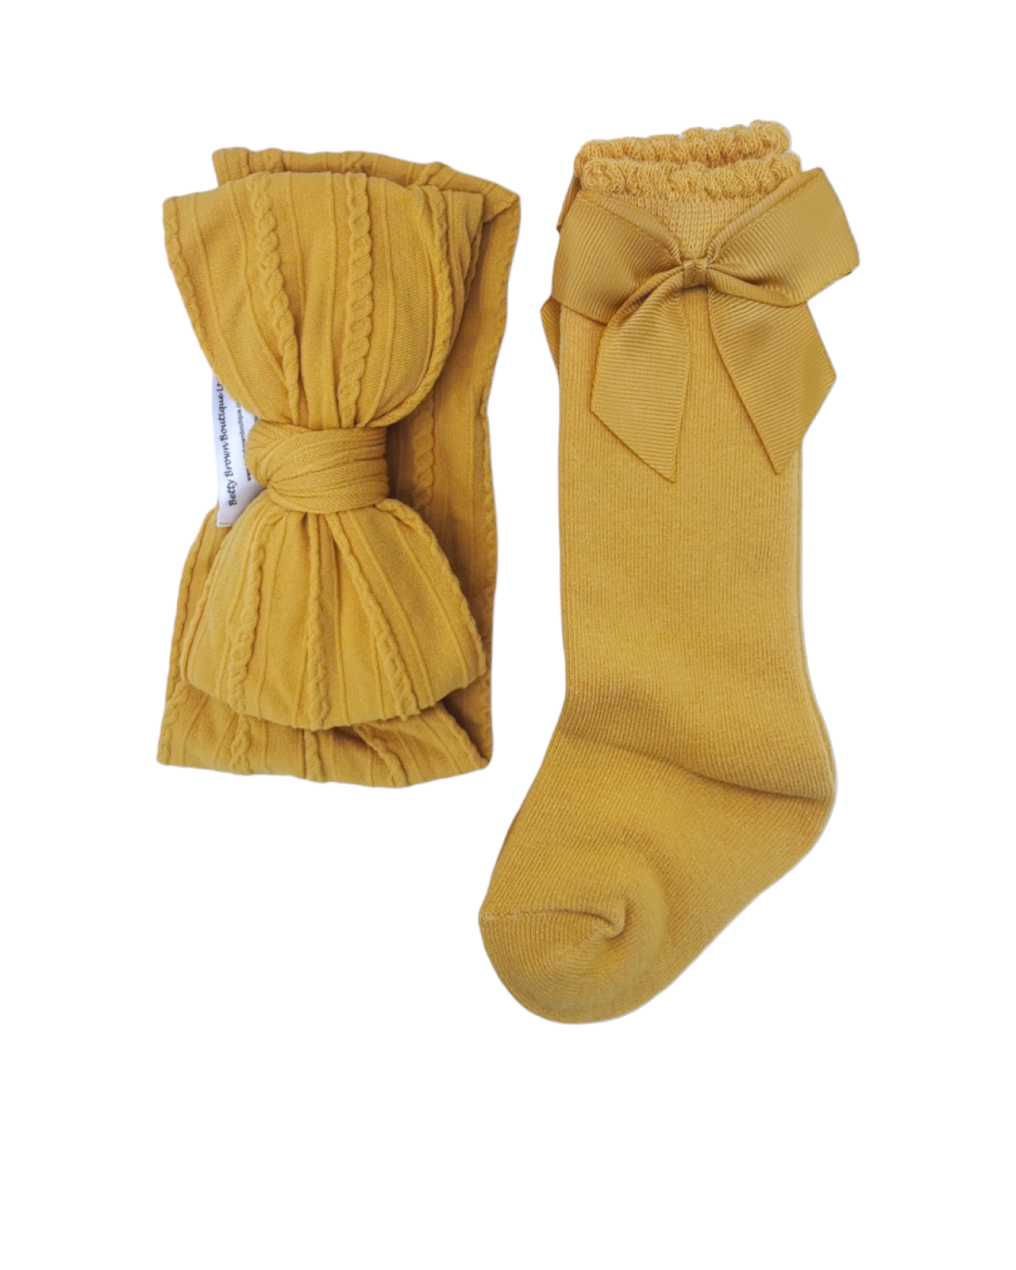 Our Dandelion Larger Headwrap & Knee High Socks Set - Betty Brown Boutique Ltd